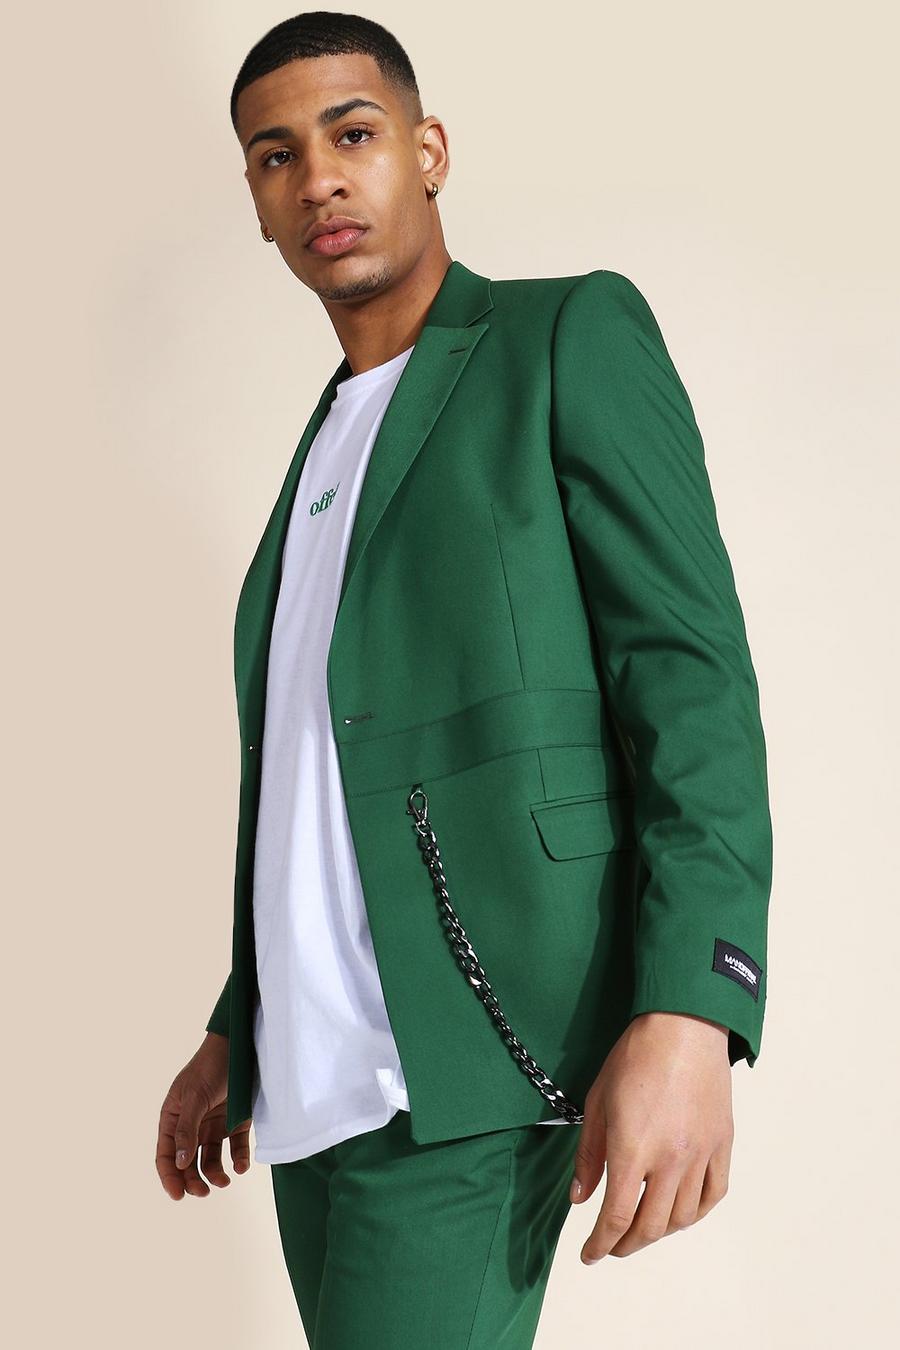 Zweireihige Skinny Fit Anzugjacke mit Kette, Dunkelgrün green